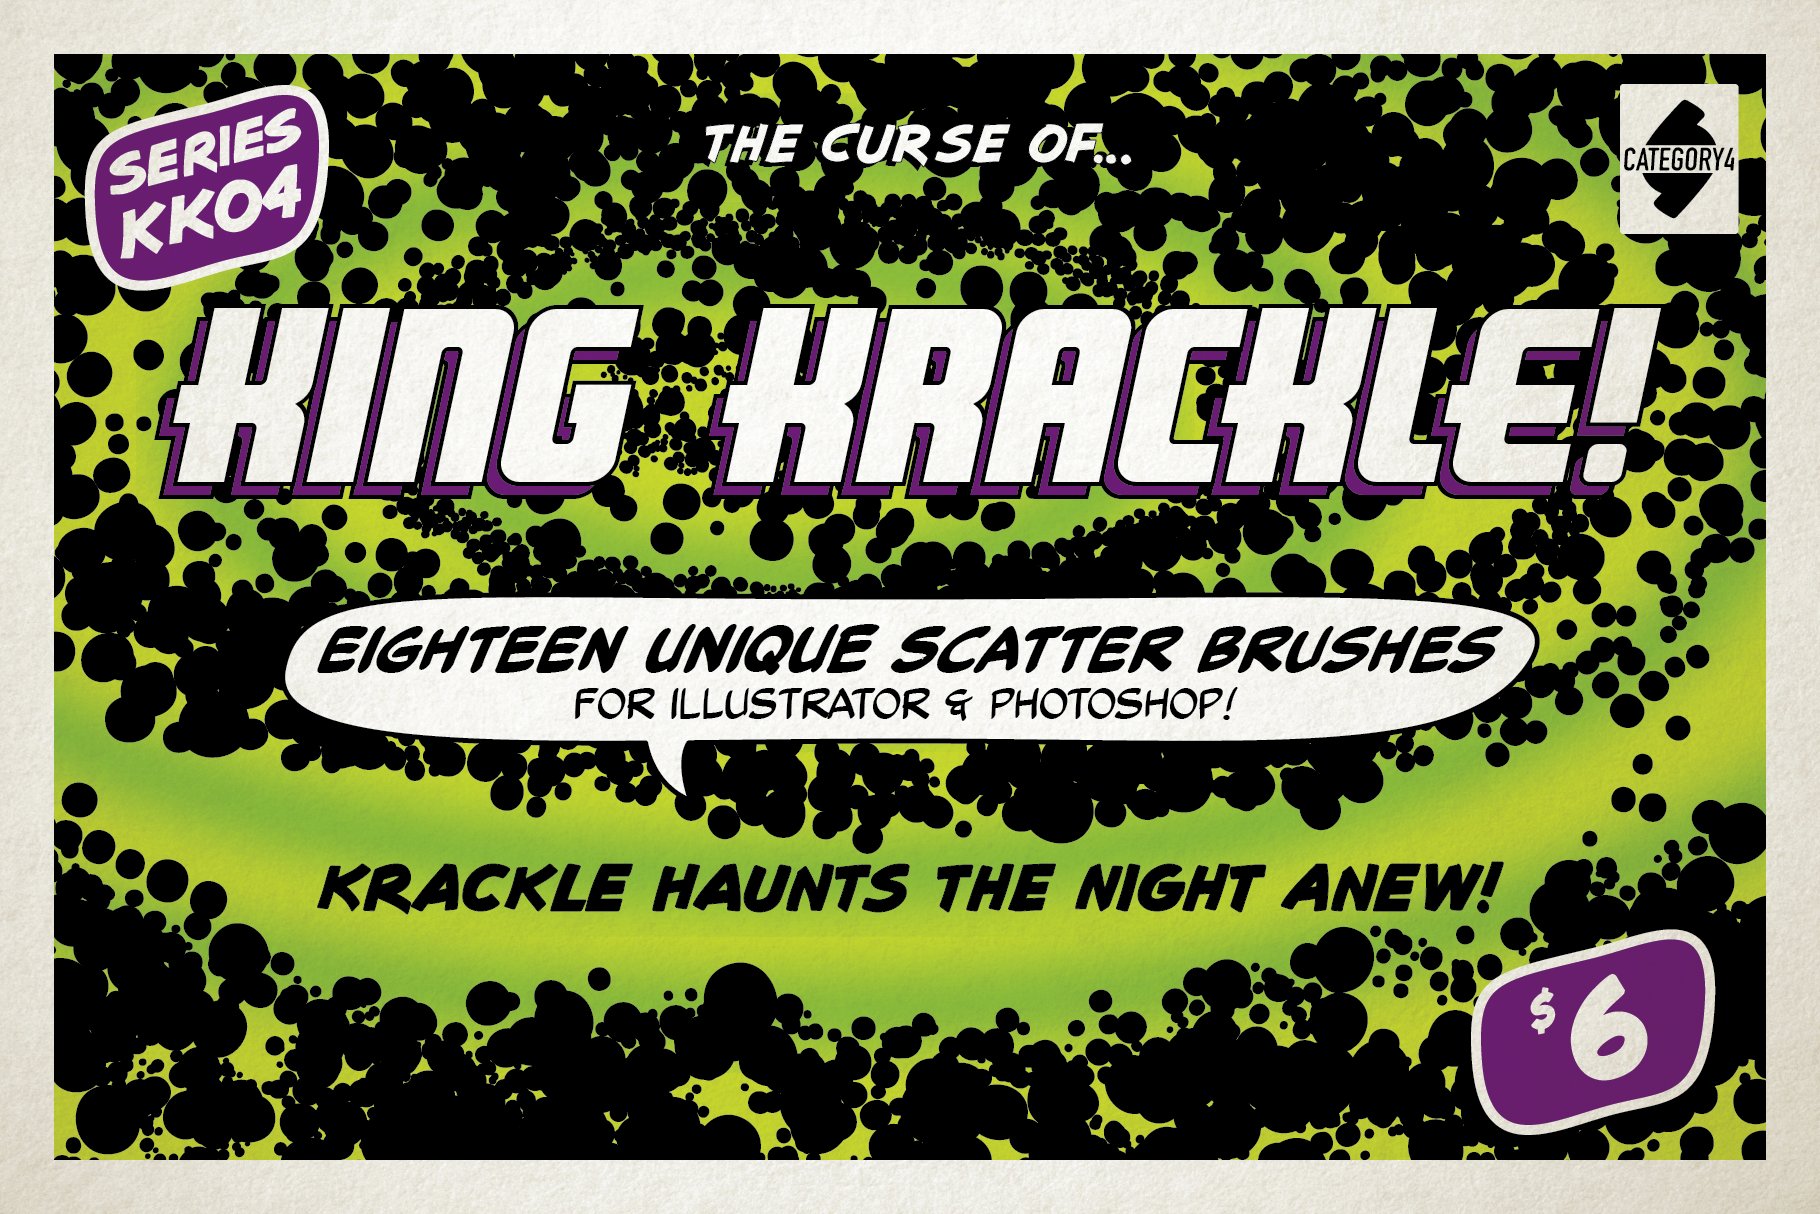 The Curse of King Krackle! [KK04]cover image.